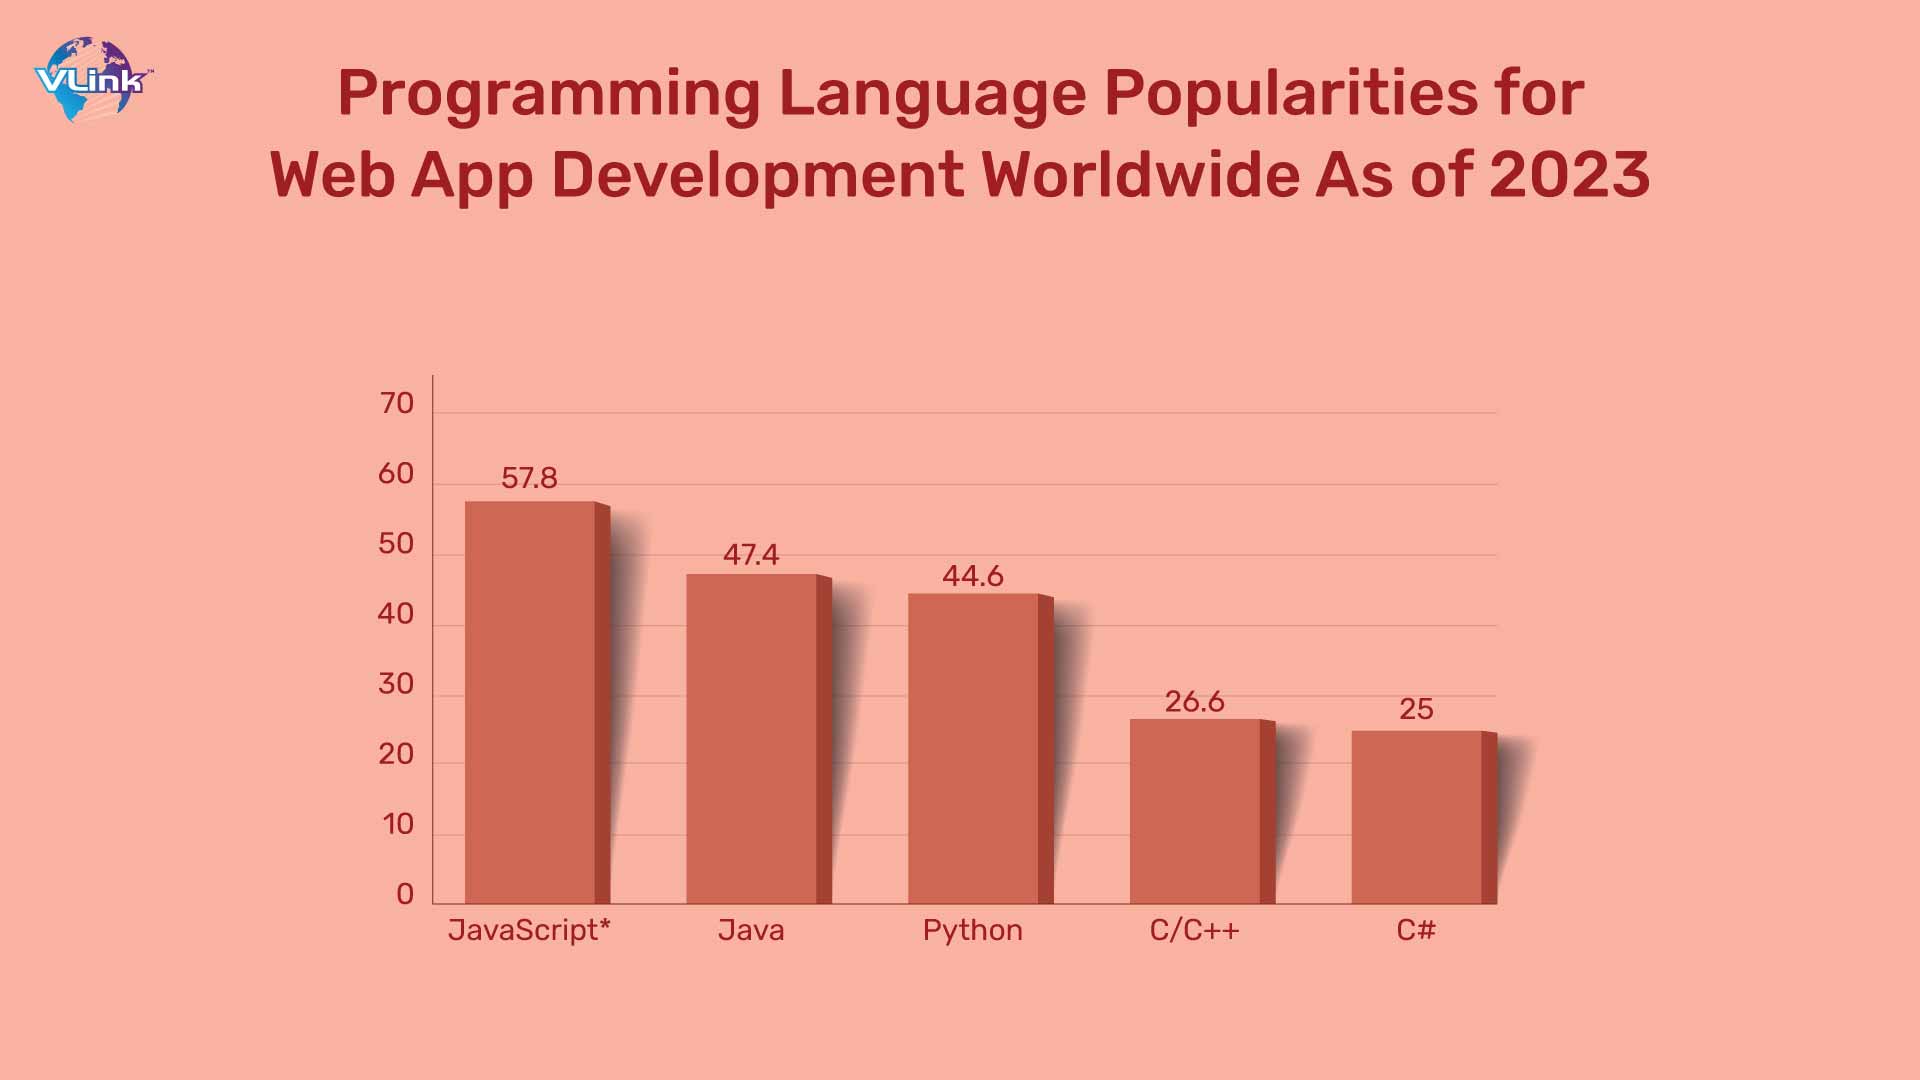 languages popularities for web app development